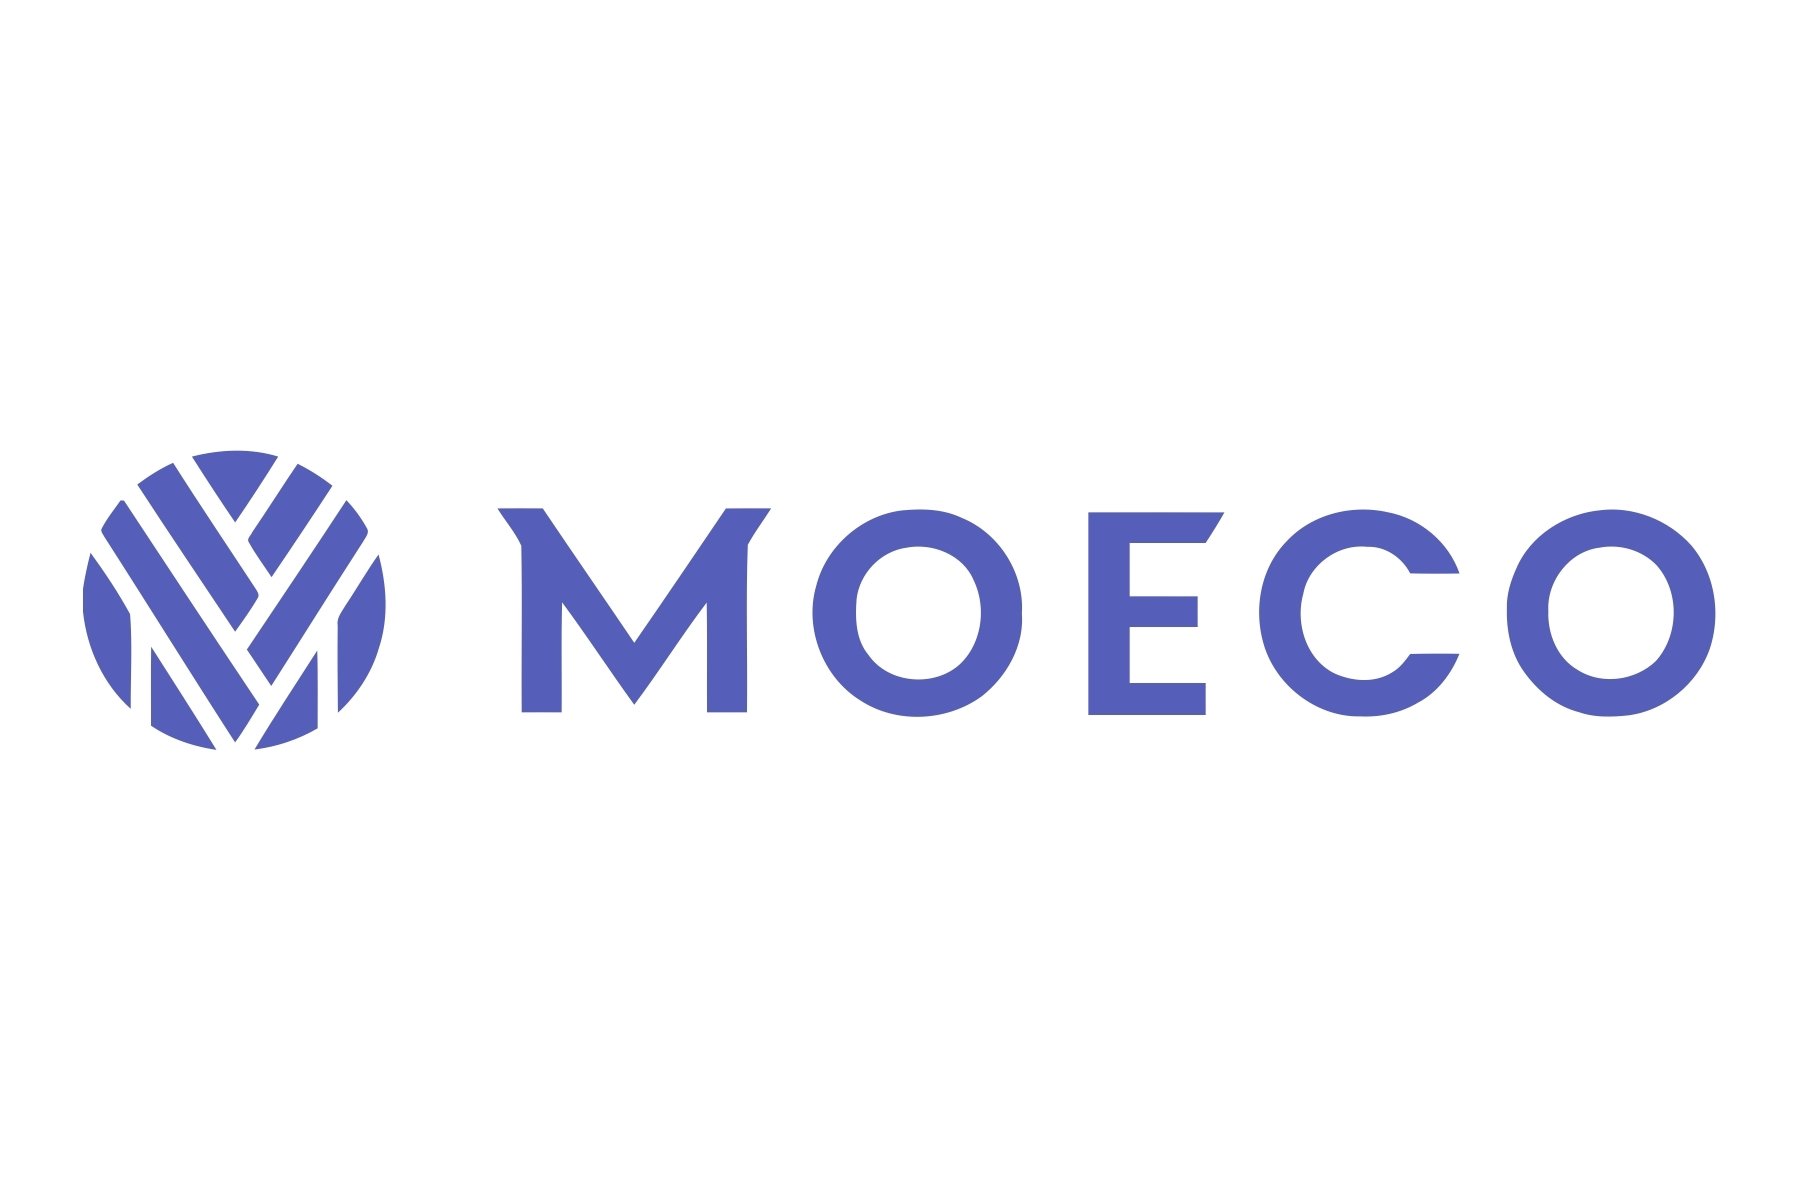 Moeco_logo_borders.jpg